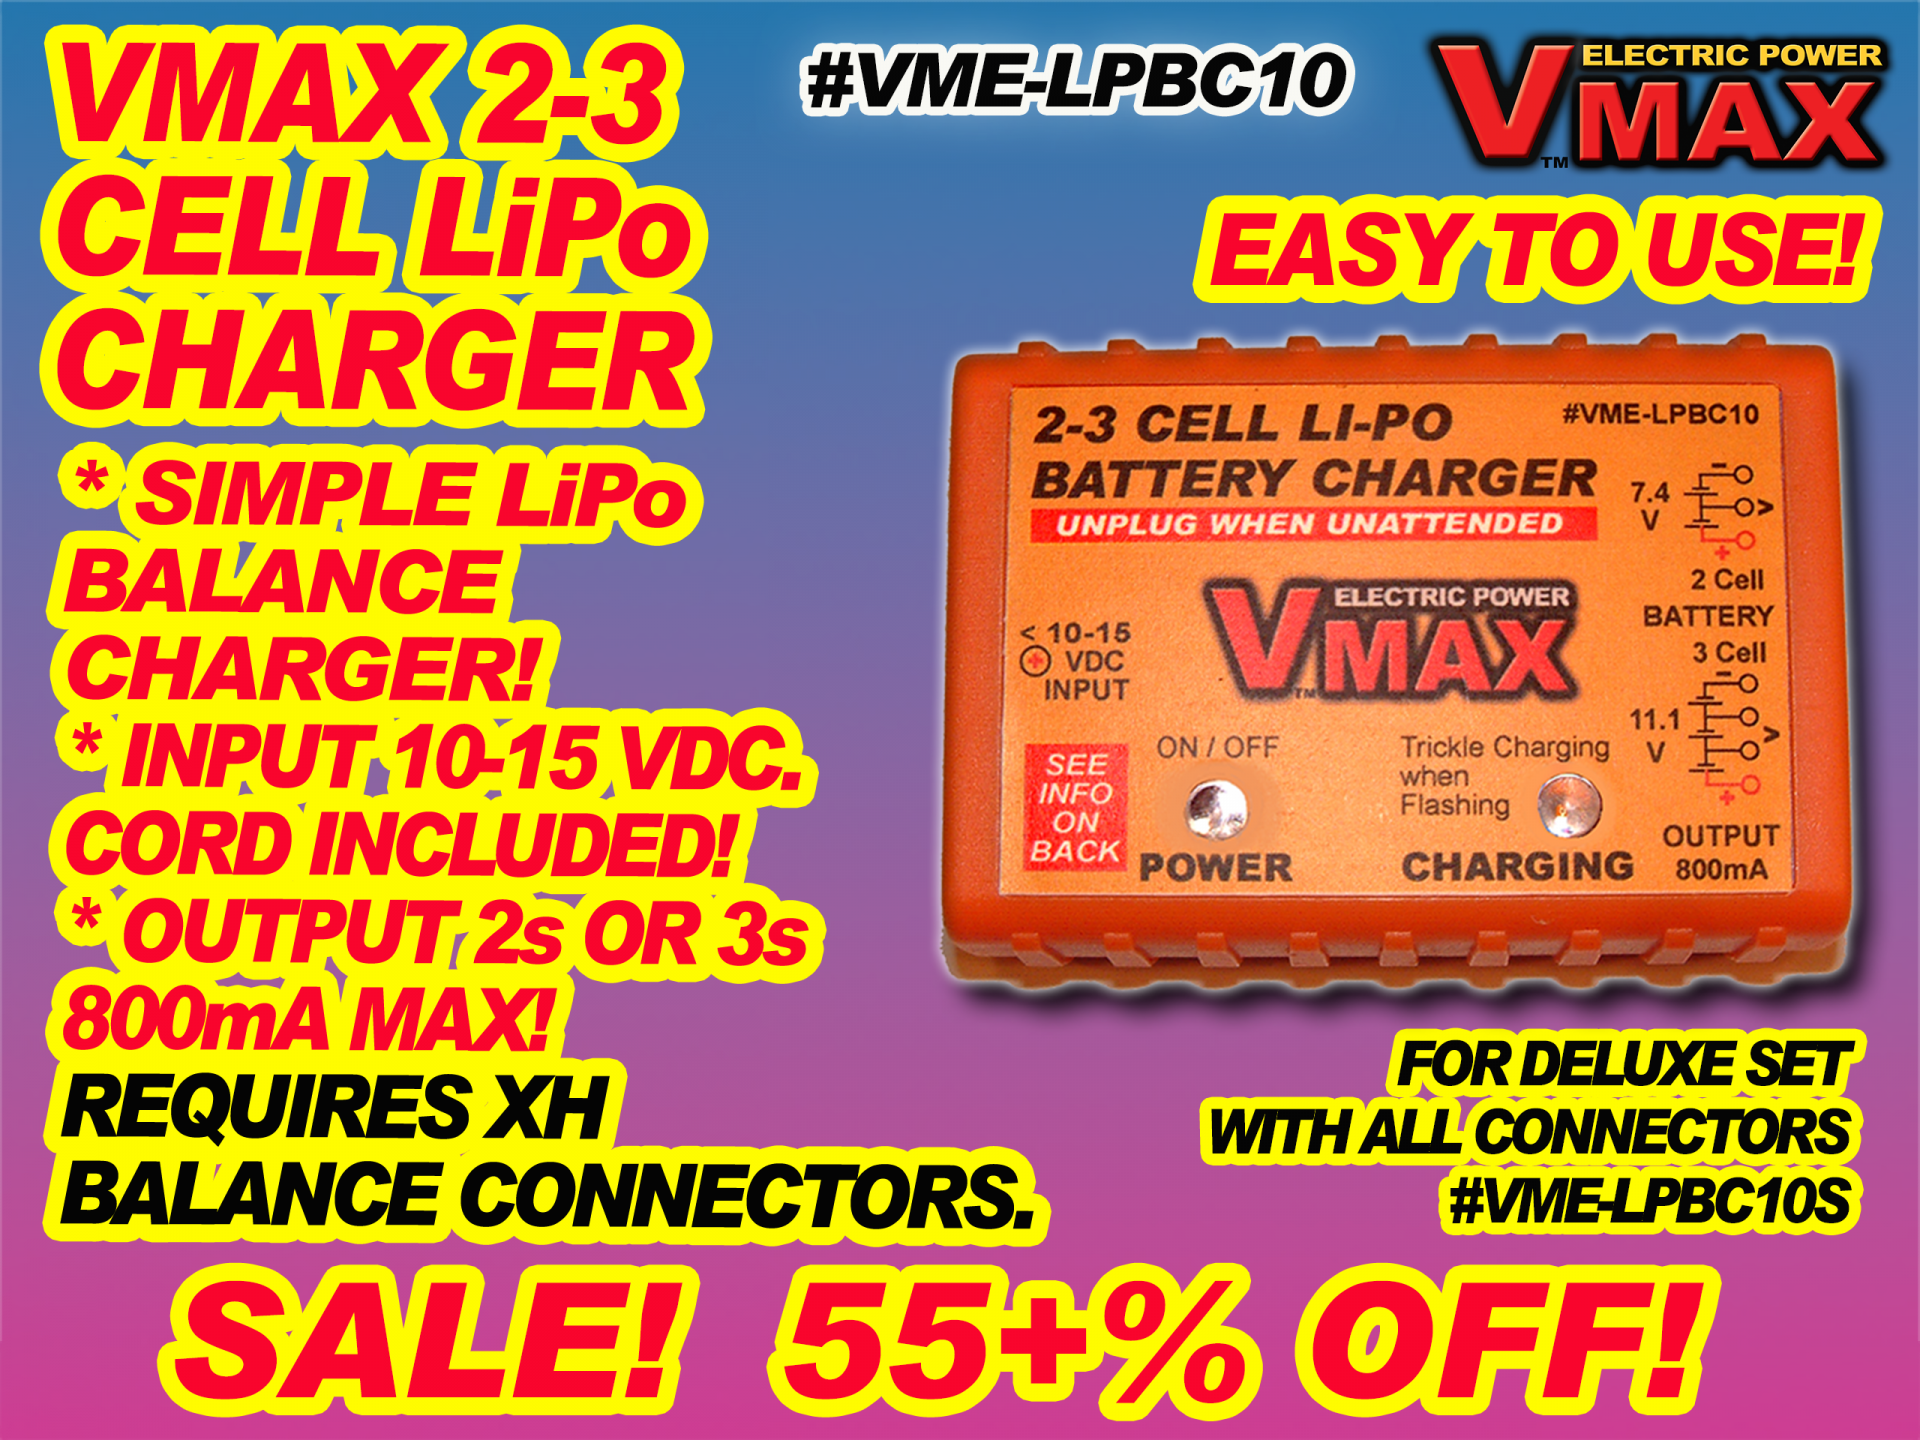 VMAX 2-3 CELL LIPO CHARGER, 800mA MAX